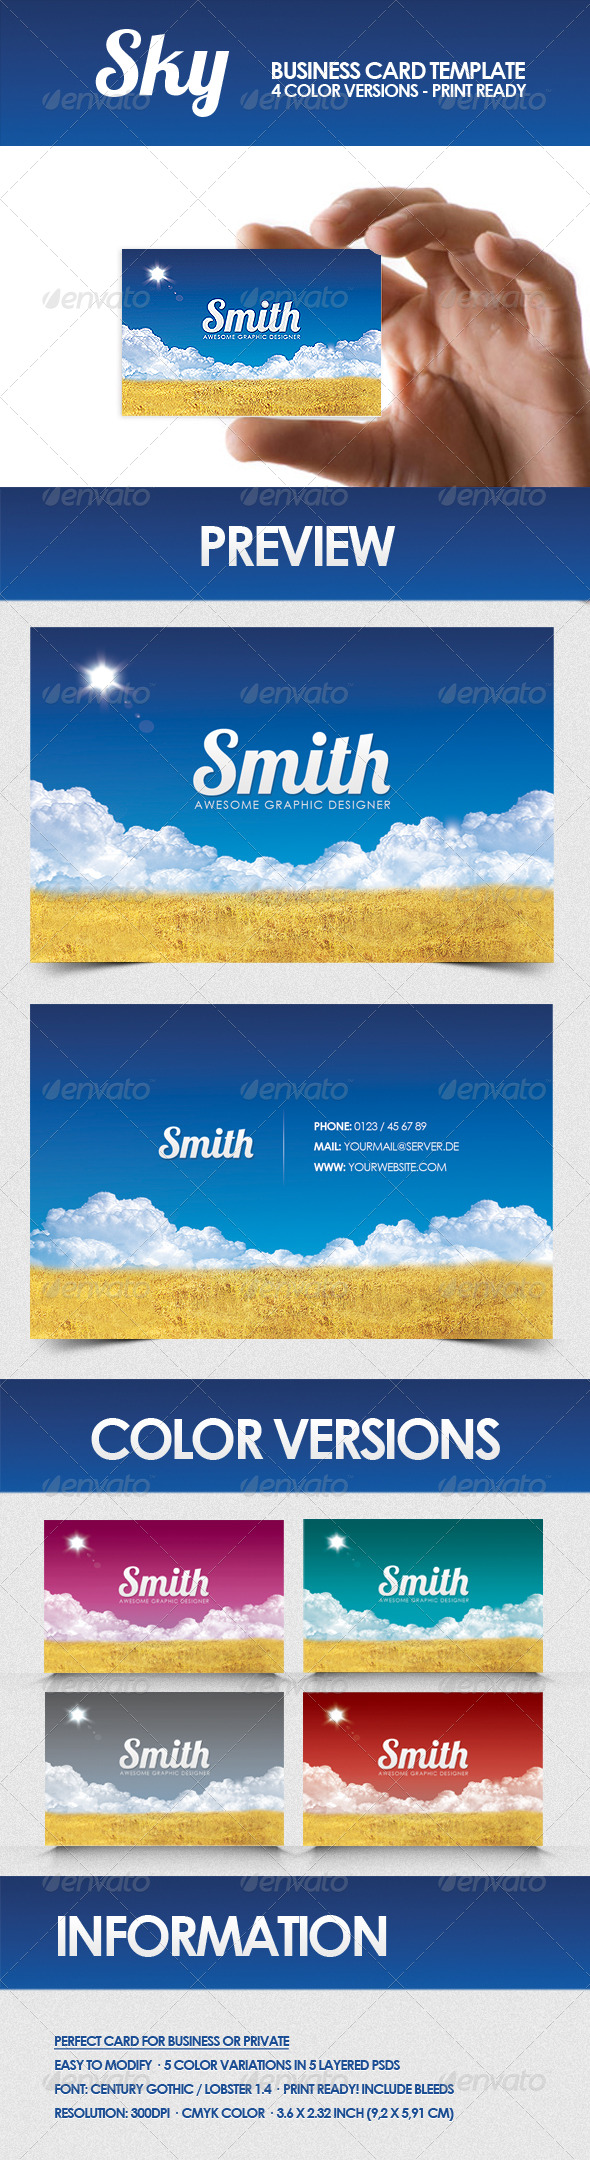 Sky - Business Card Template